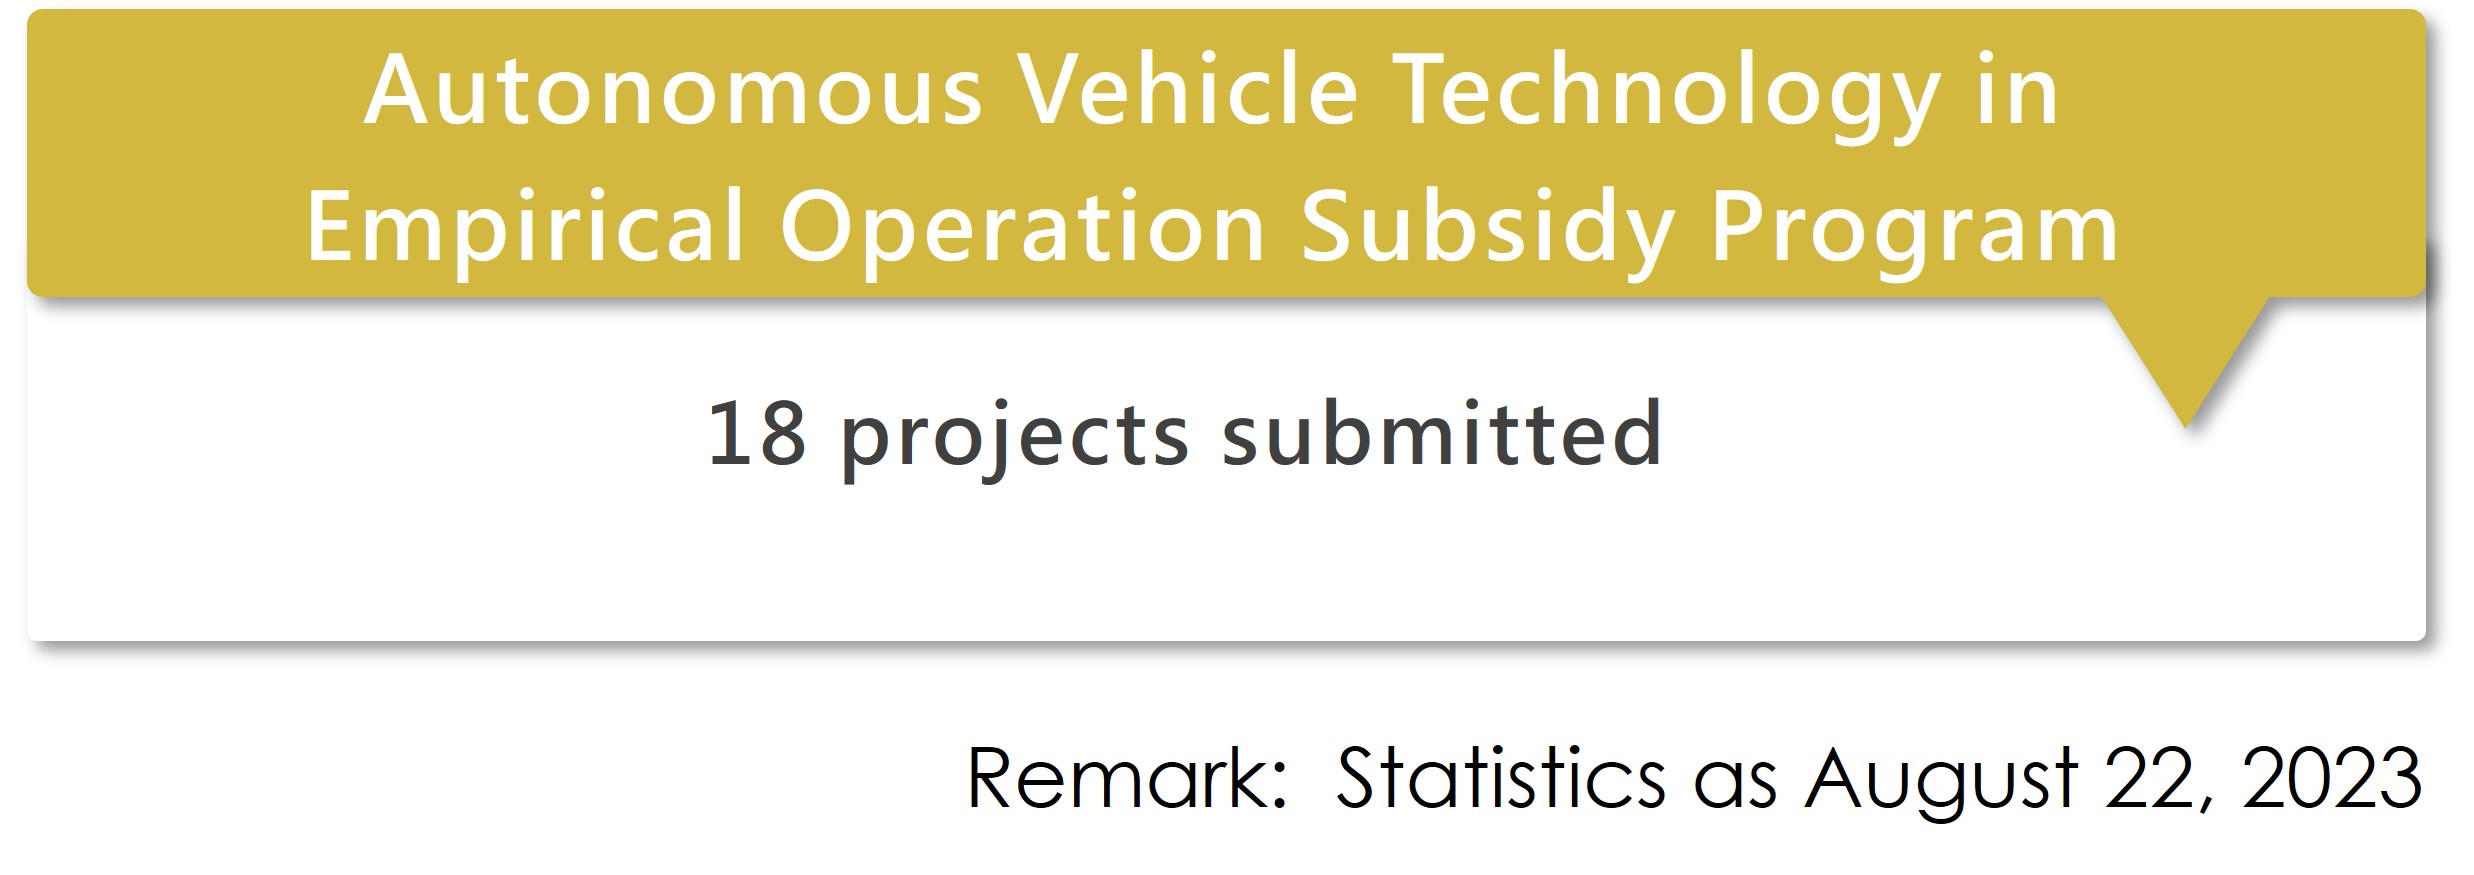 Achievements of Autonomous Vehicle Technology in Empirical Operation Subsidy Program